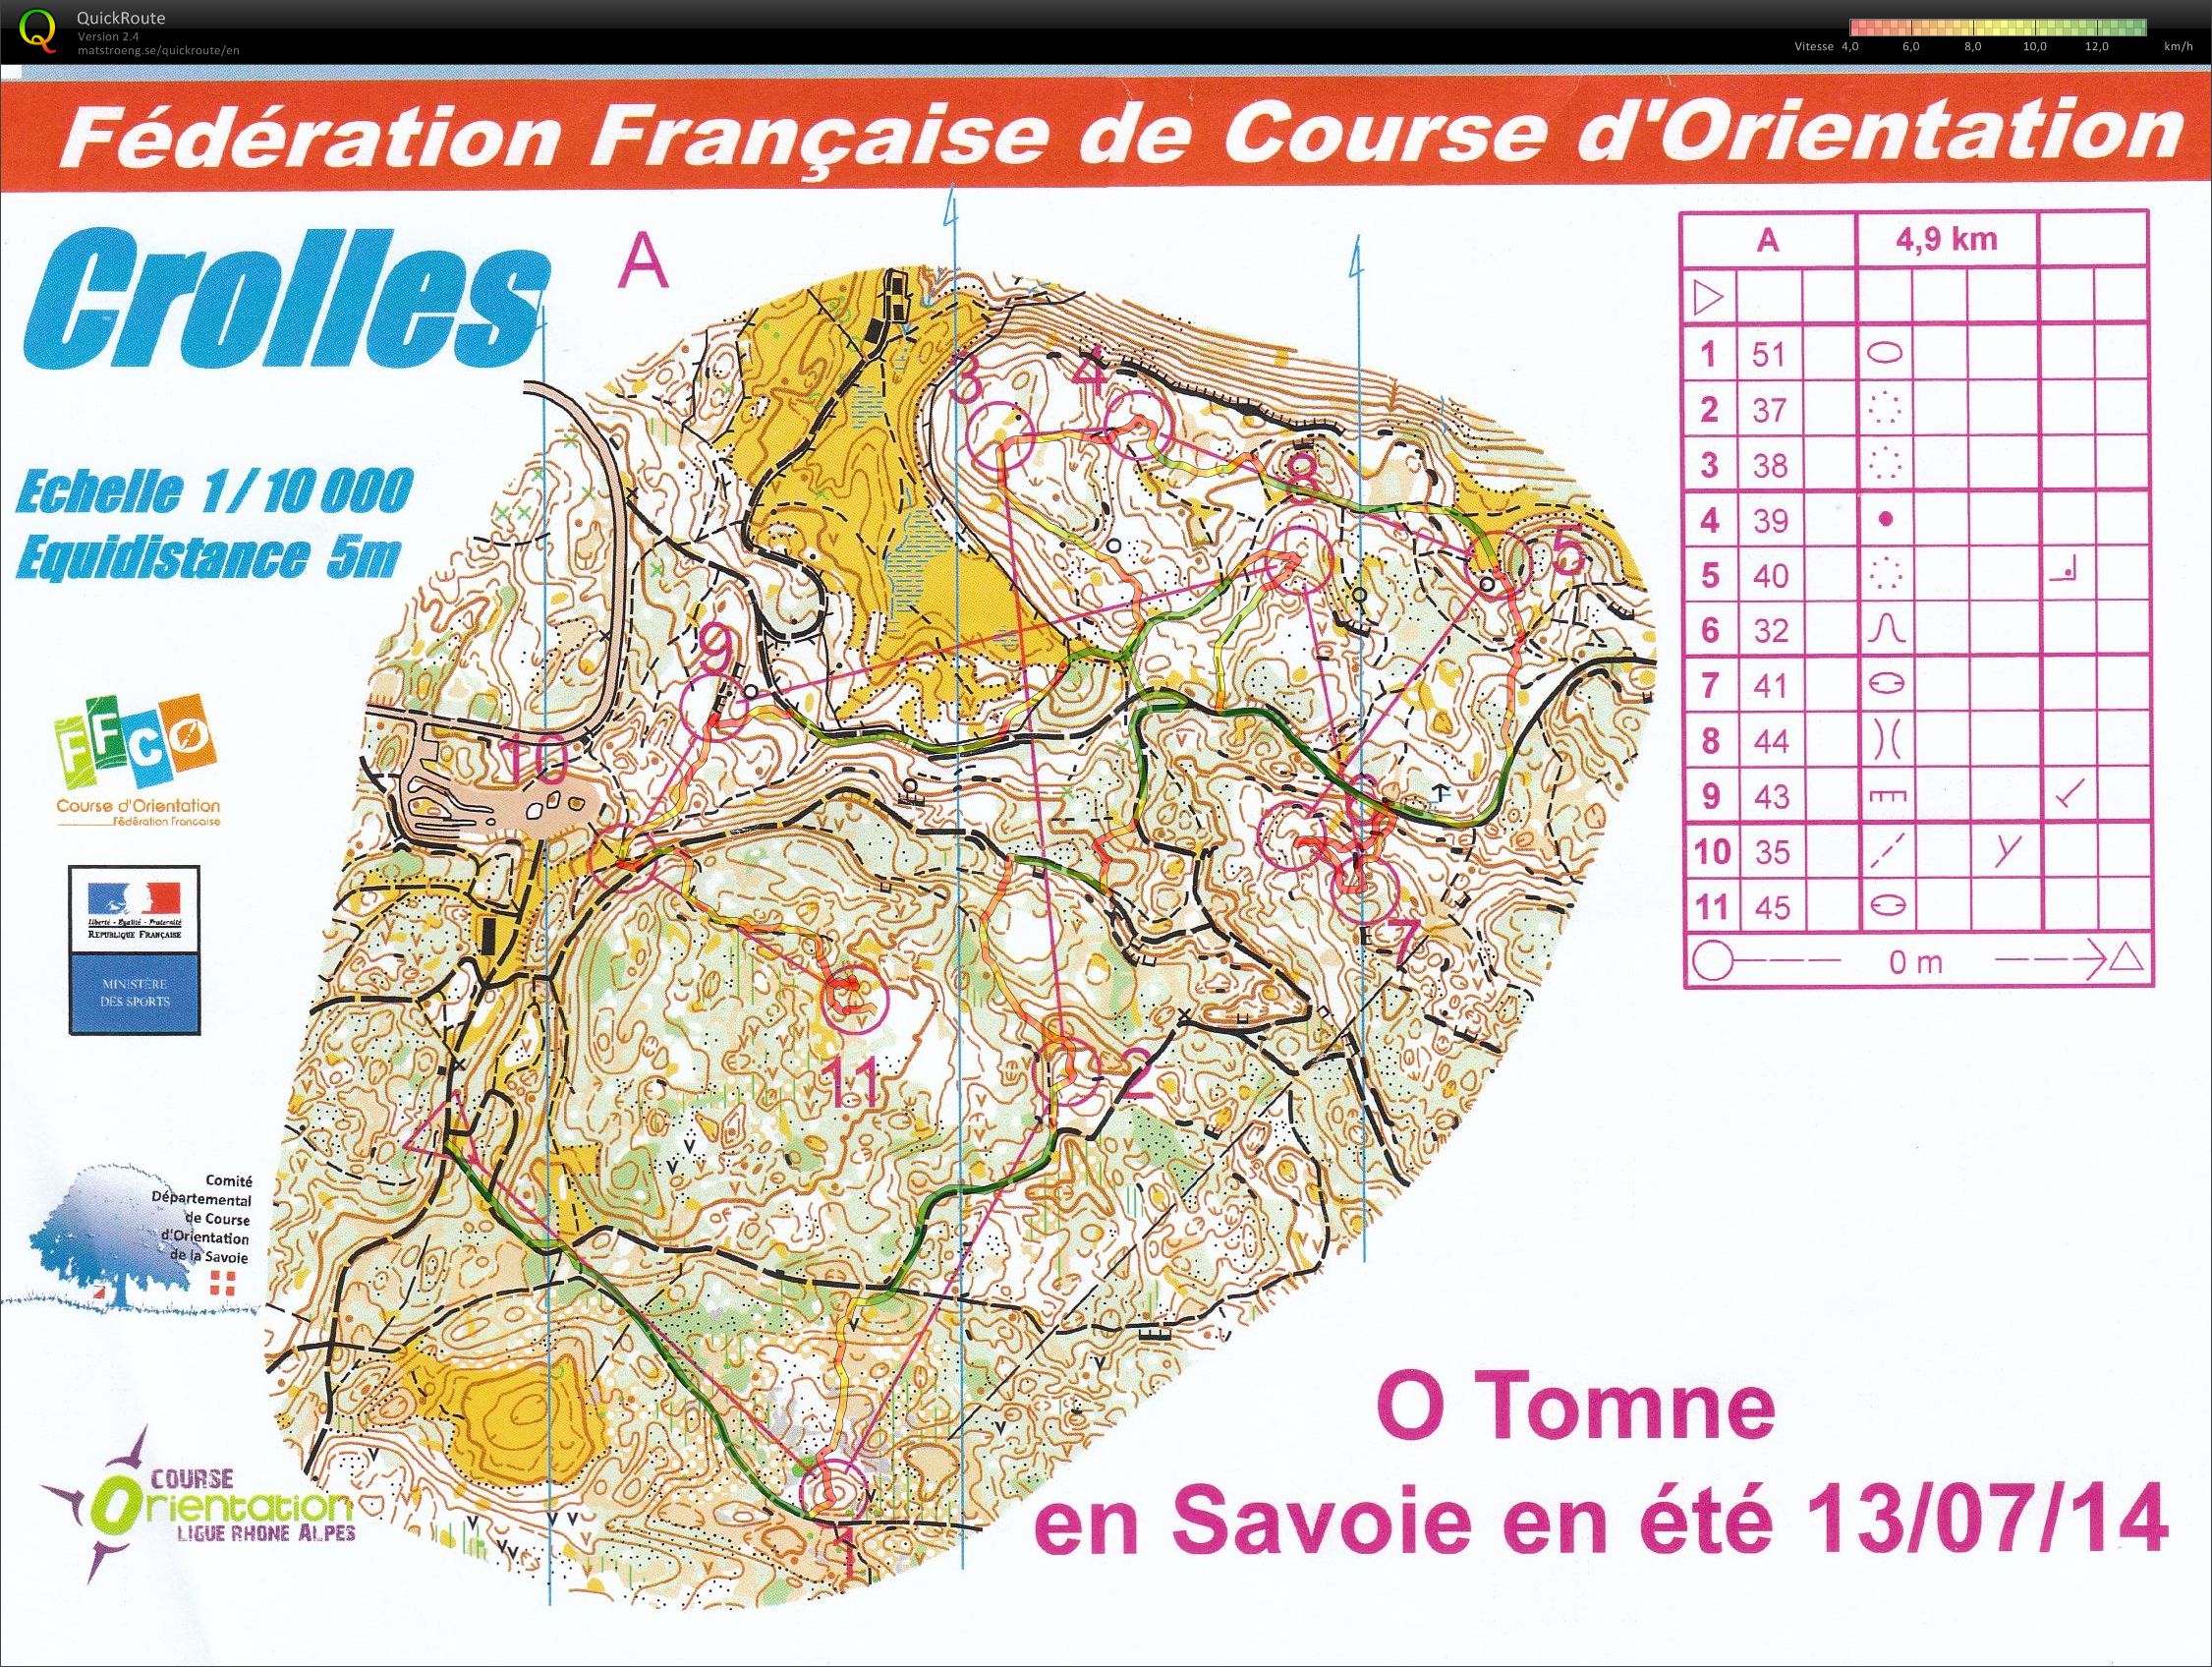 O'Tomne en Savoie Etape 4 (1/2) (13-07-2014)